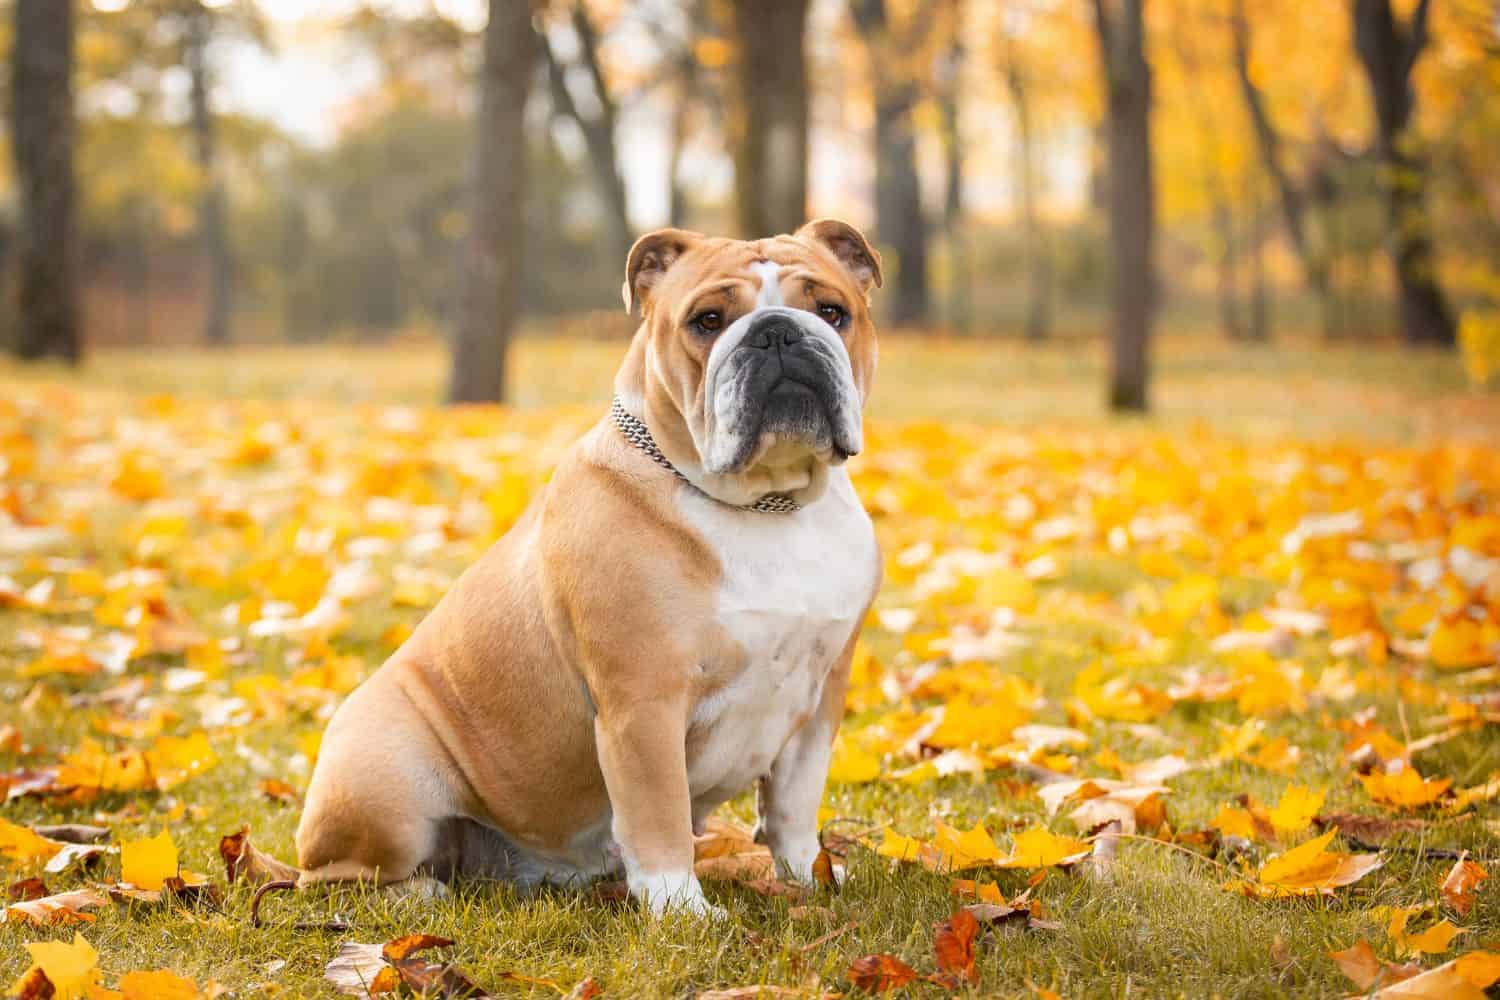 Adorabile bulldog inglese posa in autunno nel parco